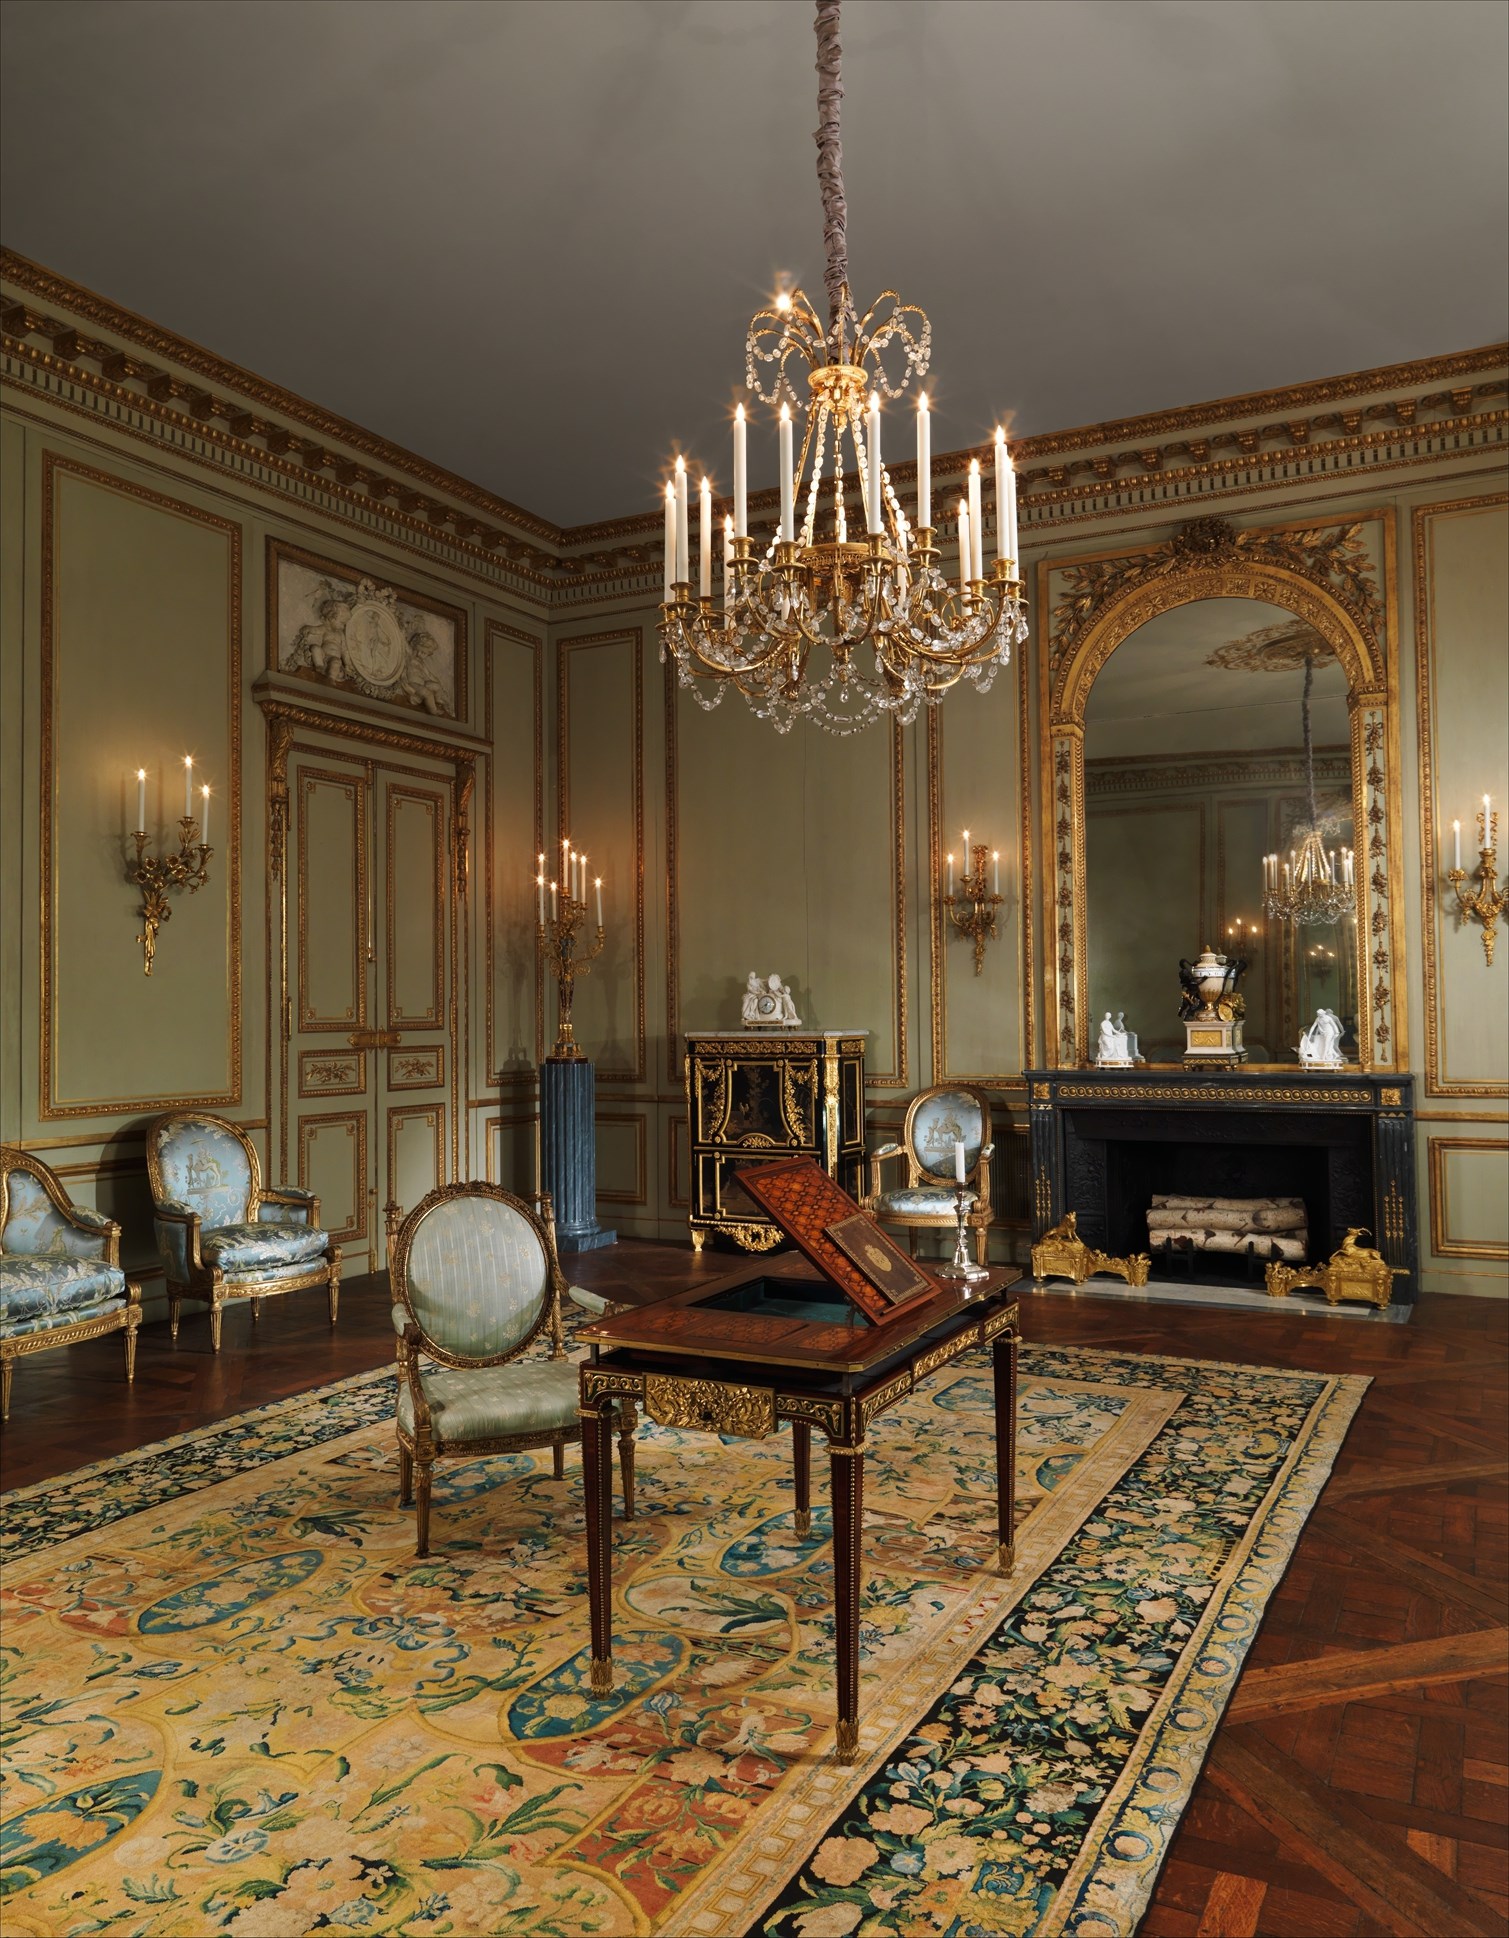 Marie-Antoinette French Louis XVI ormolu-mounted Dining Room Set